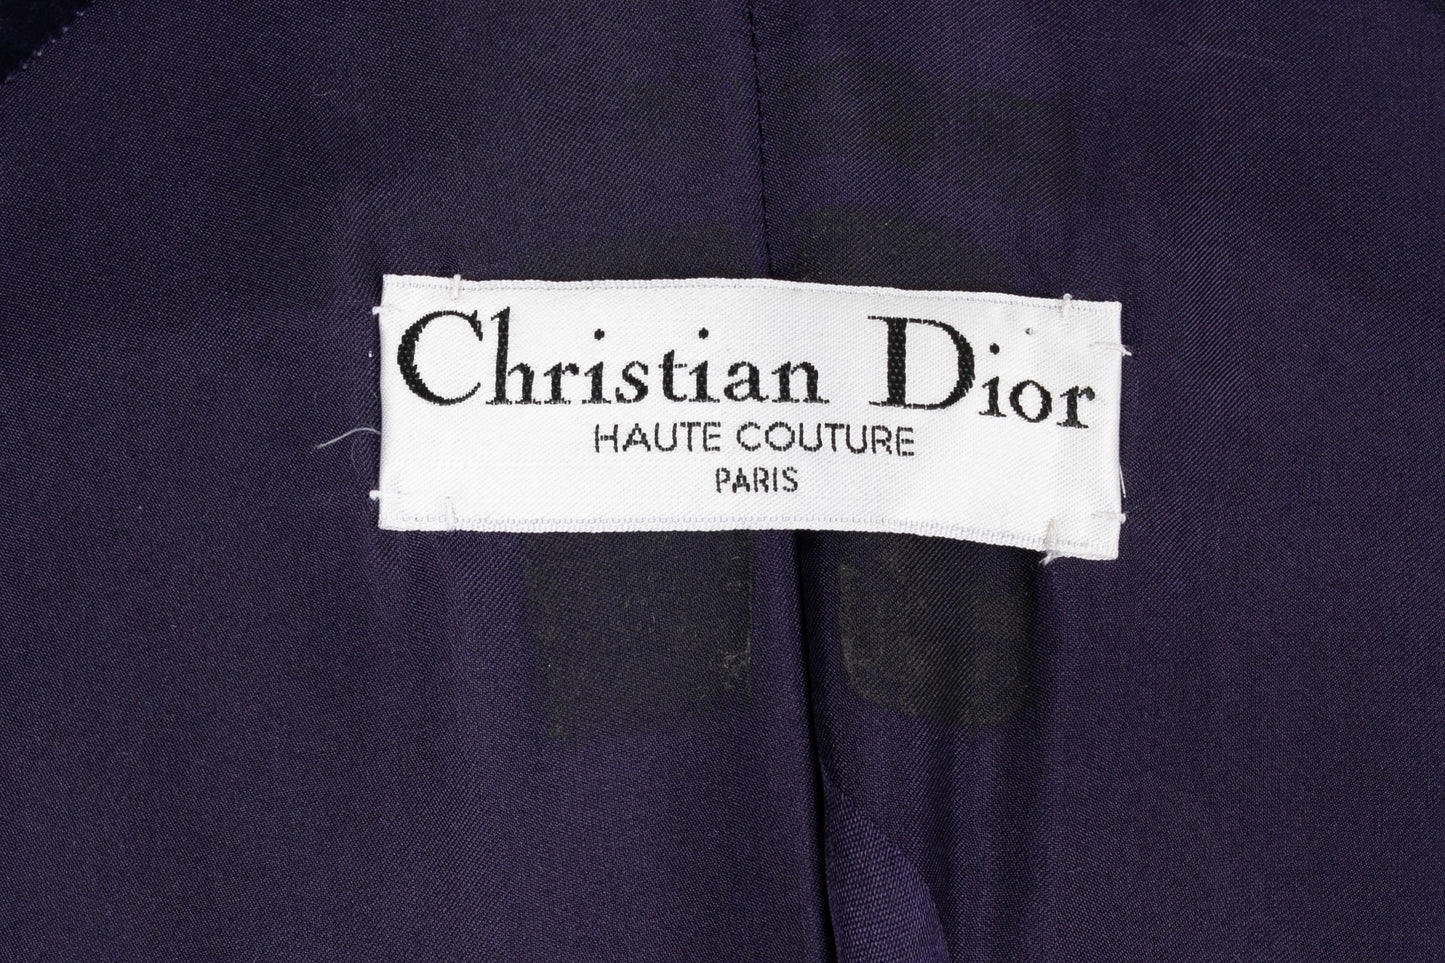 Manteau Christian Dior Haute Couture 2005